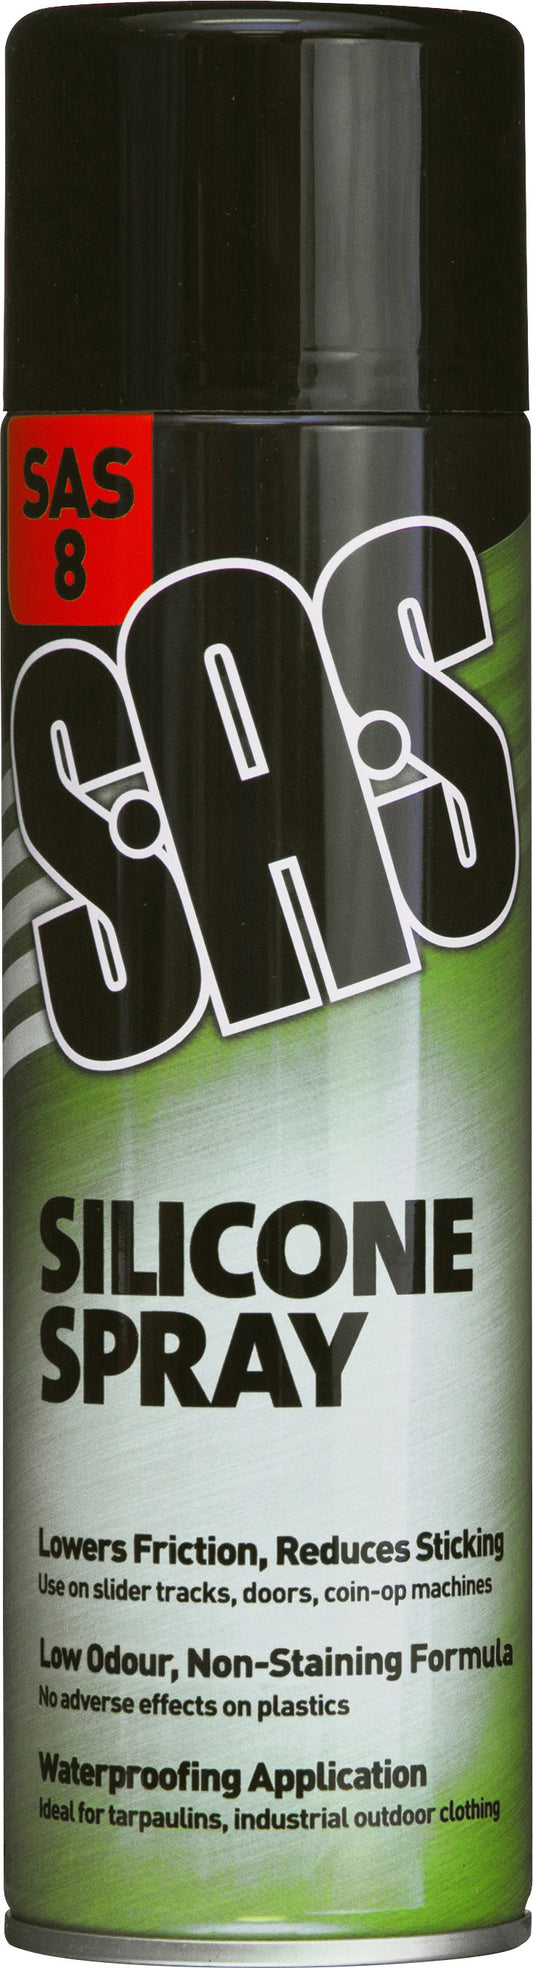 S.A.S Silicone Spray 500ml